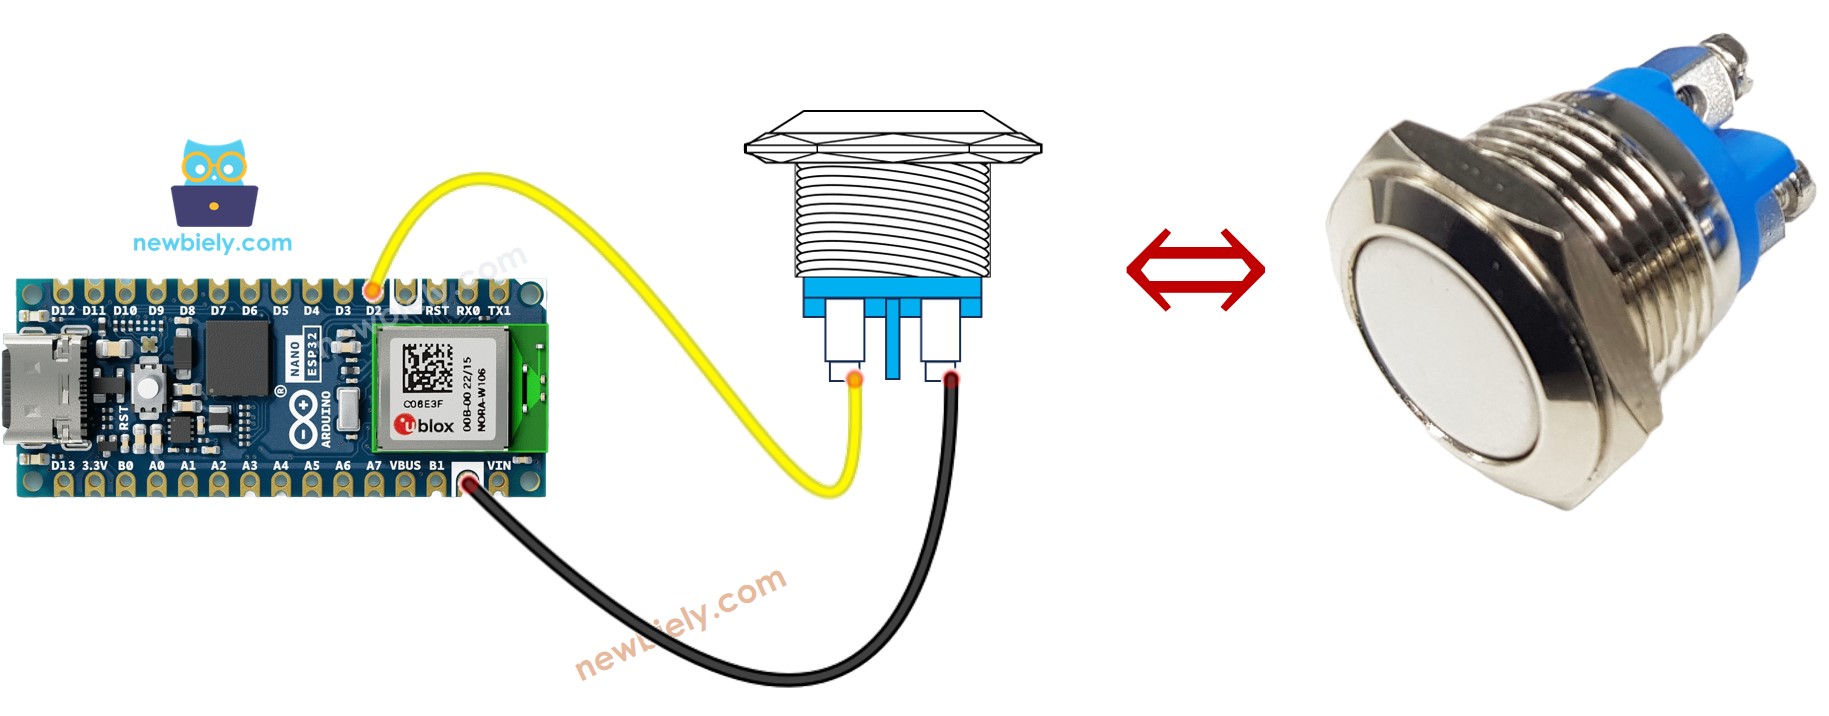 The wiring diagram between Arduino Nano ESP32 and two-pin push button